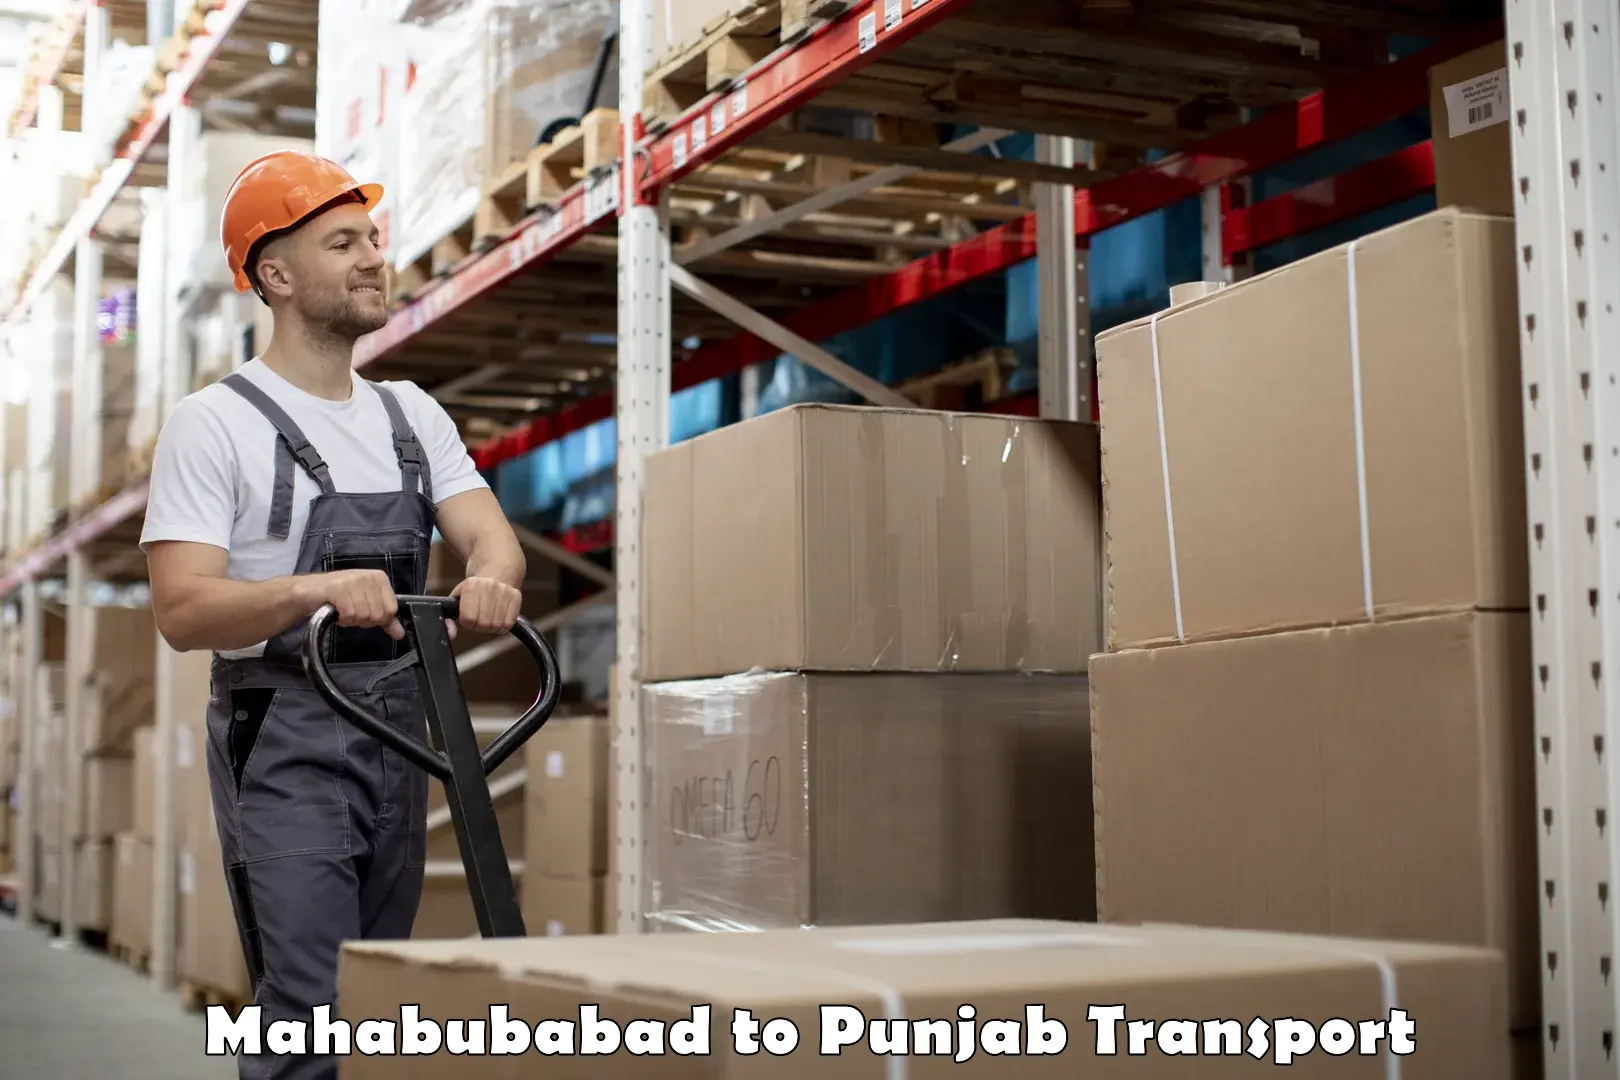 Delivery service Mahabubabad to Punjab